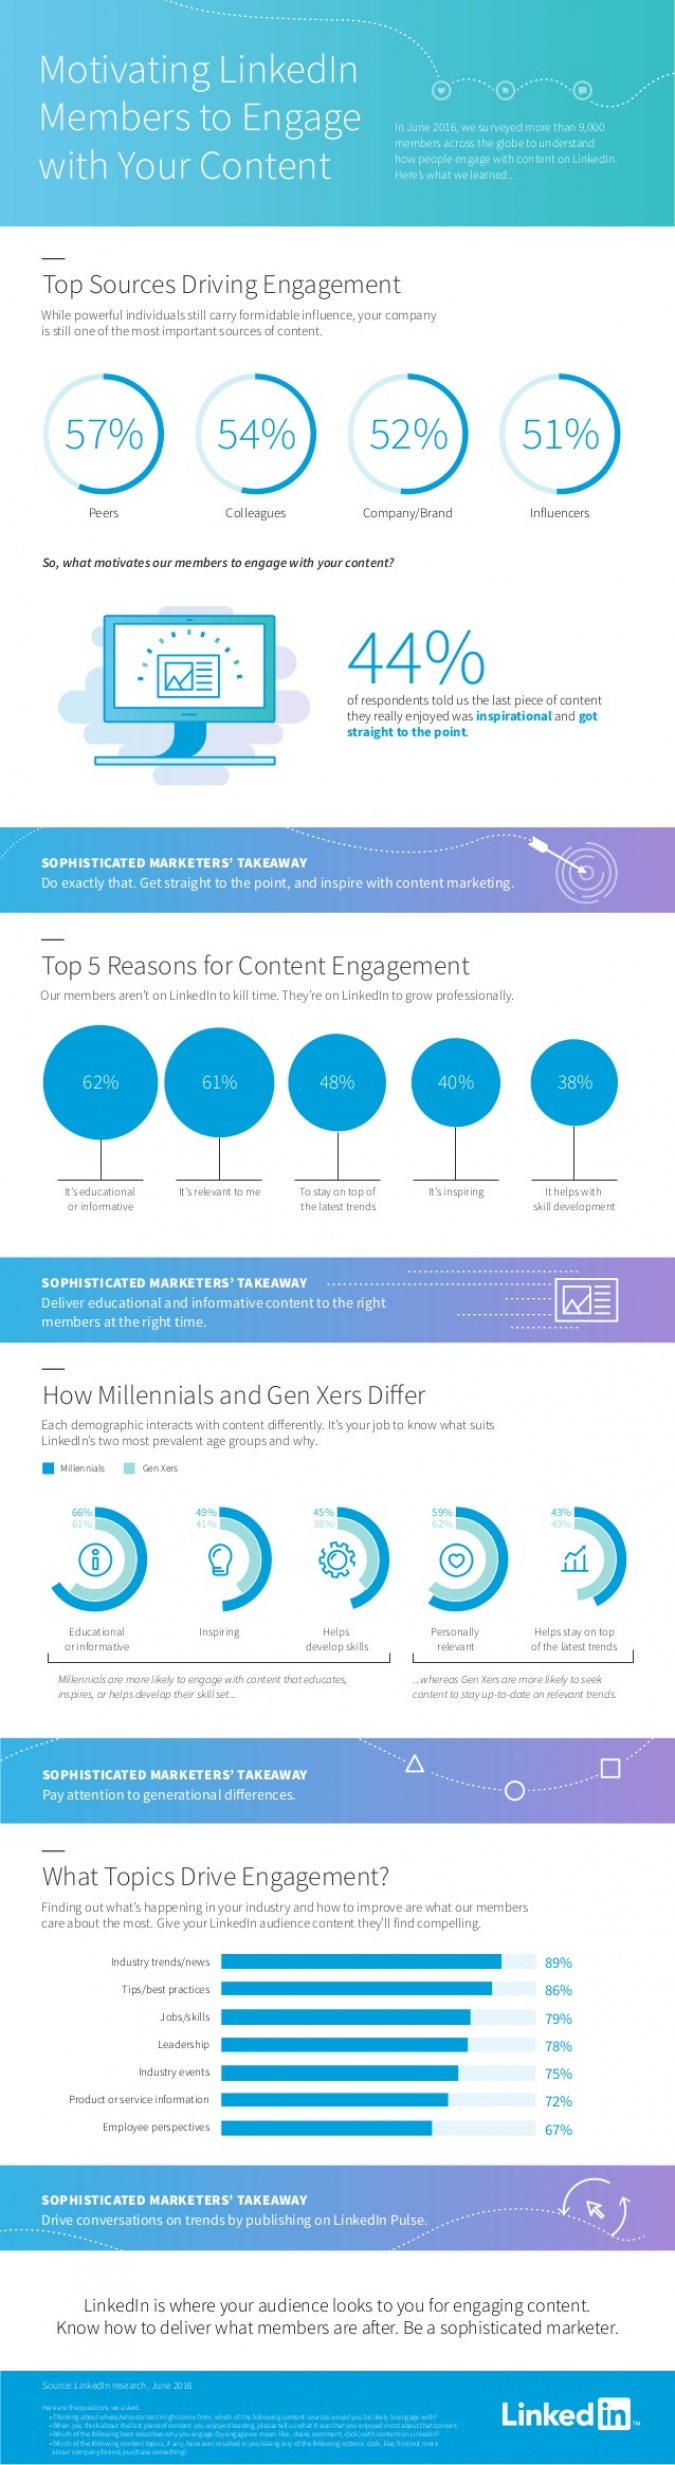 Content Marketing für B2B-Unternehmen via LinkedIn – Top Social Media B2B-Tipps [Infografik]